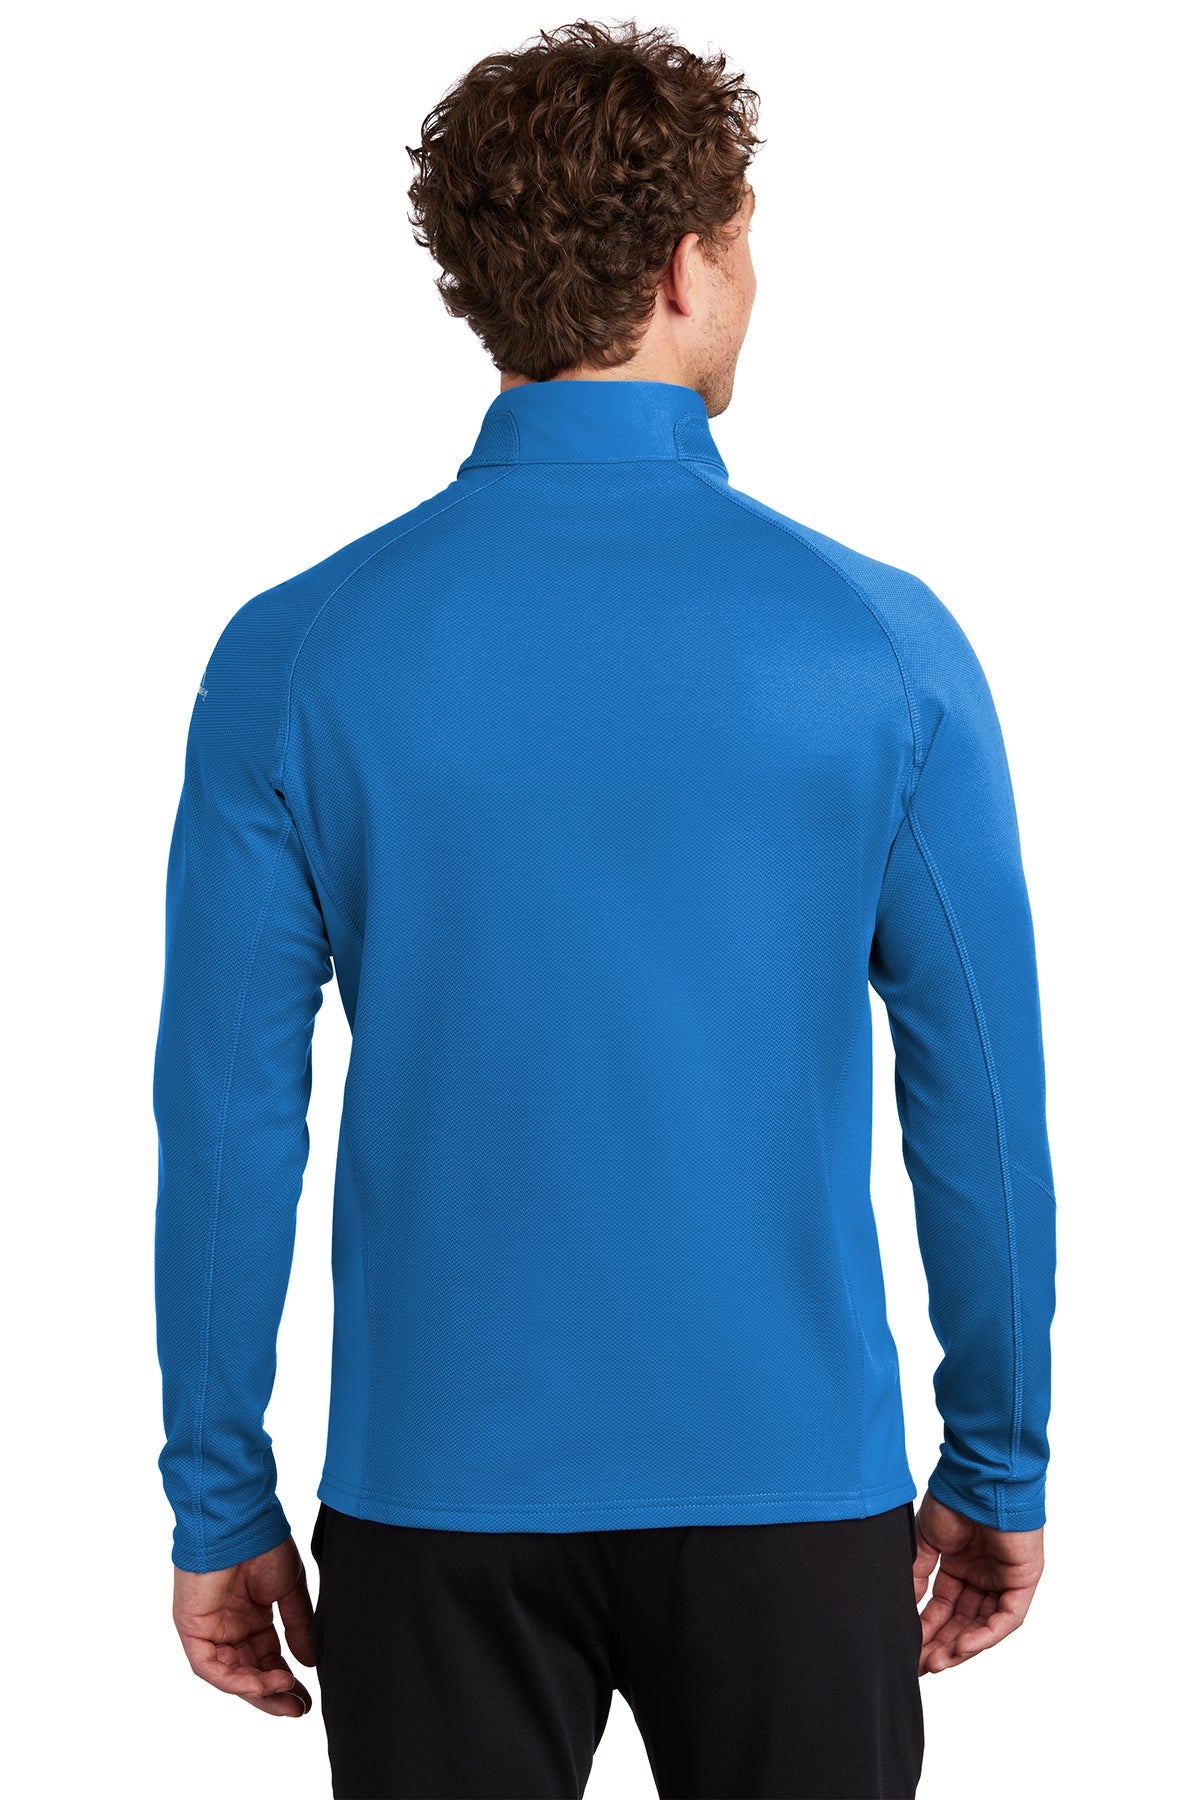 eddie bauer_eb234 _ascent blue_company_logo_sweatshirts